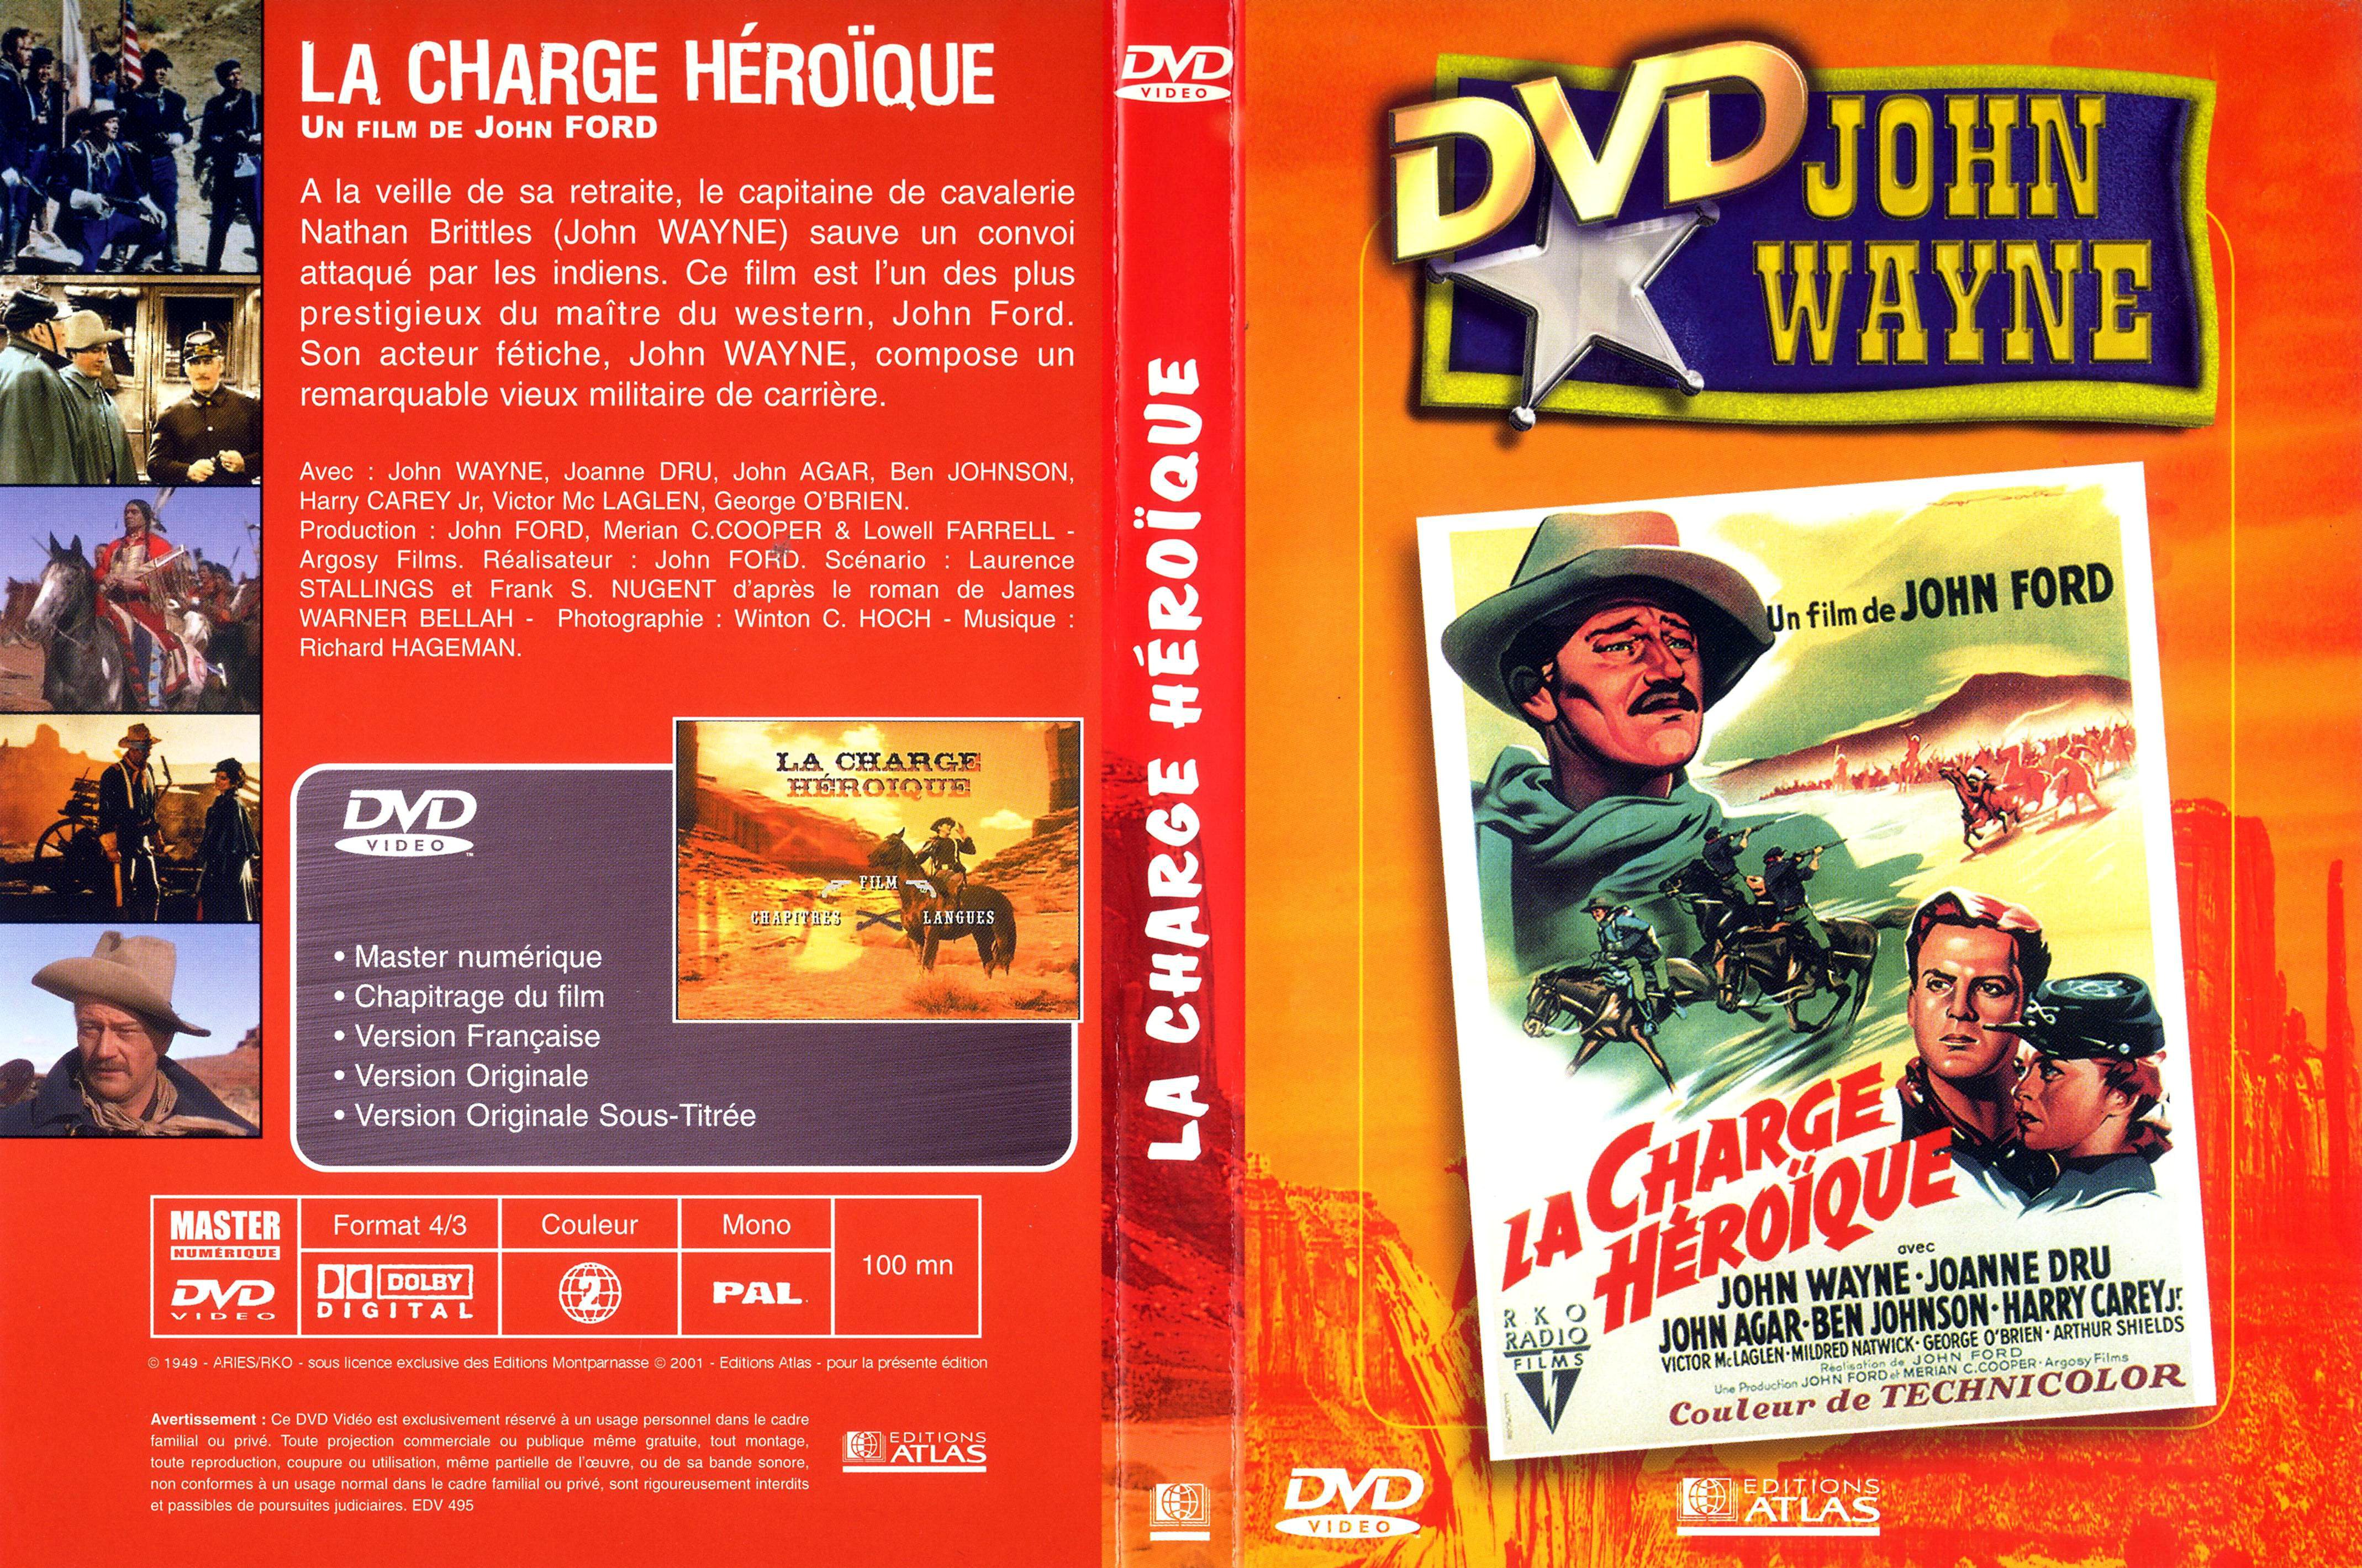 Jaquette DVD La charge heroique v2